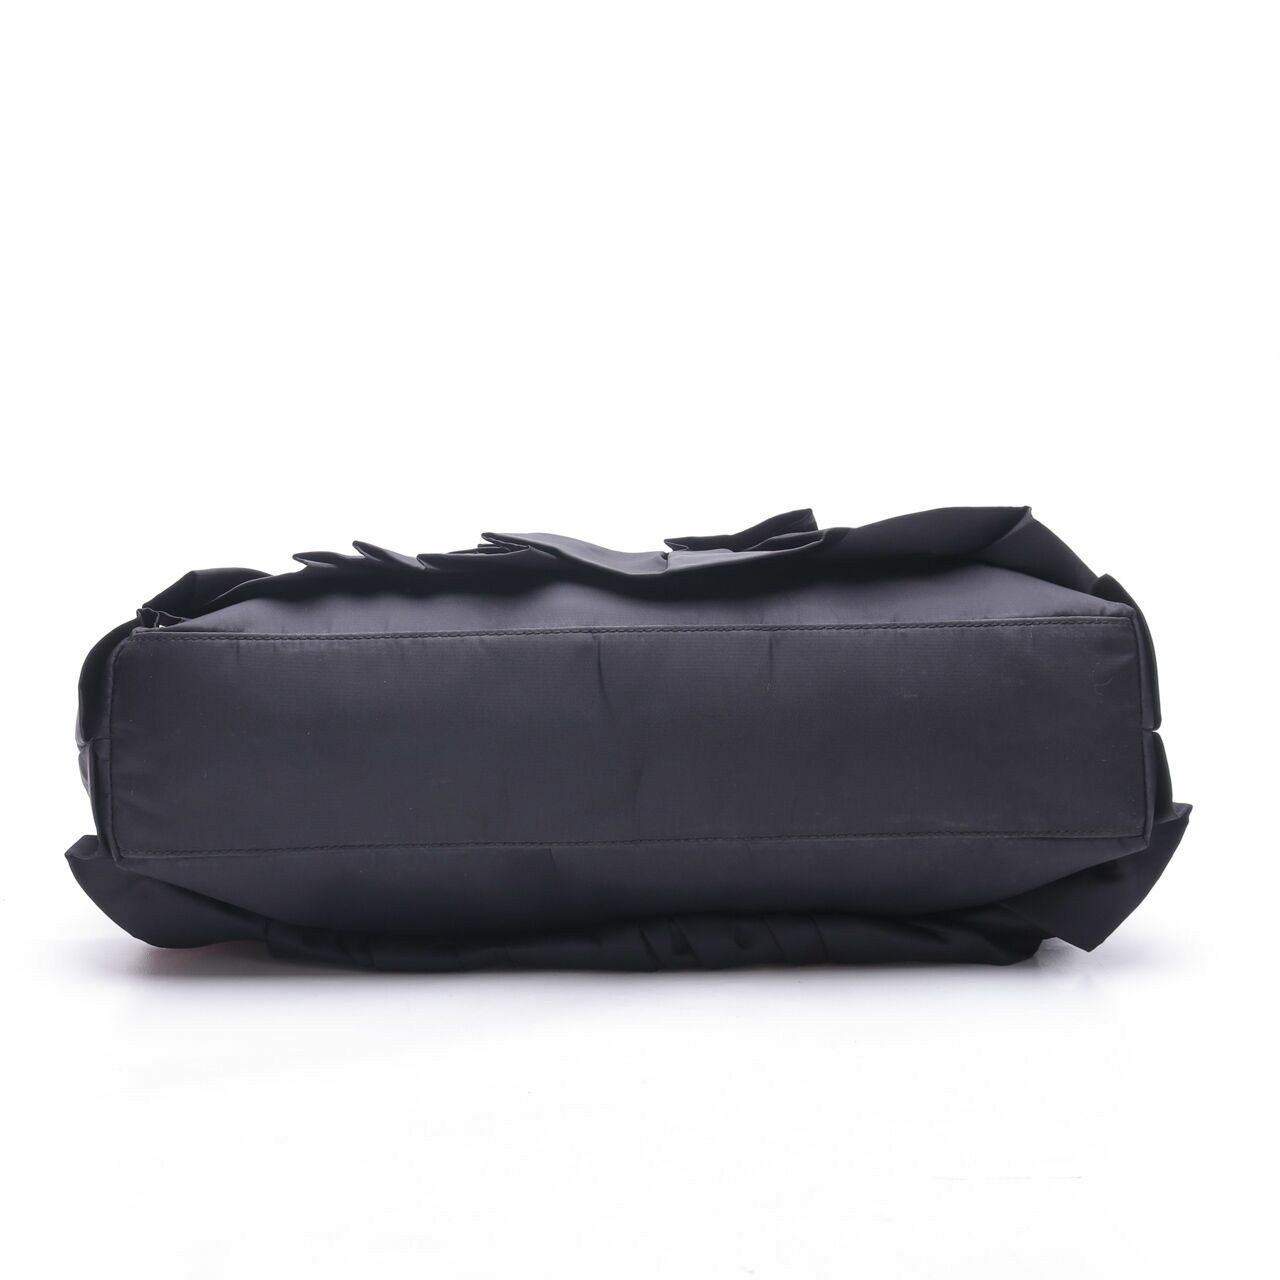 Tocco Toscano Black Shoulder Bag